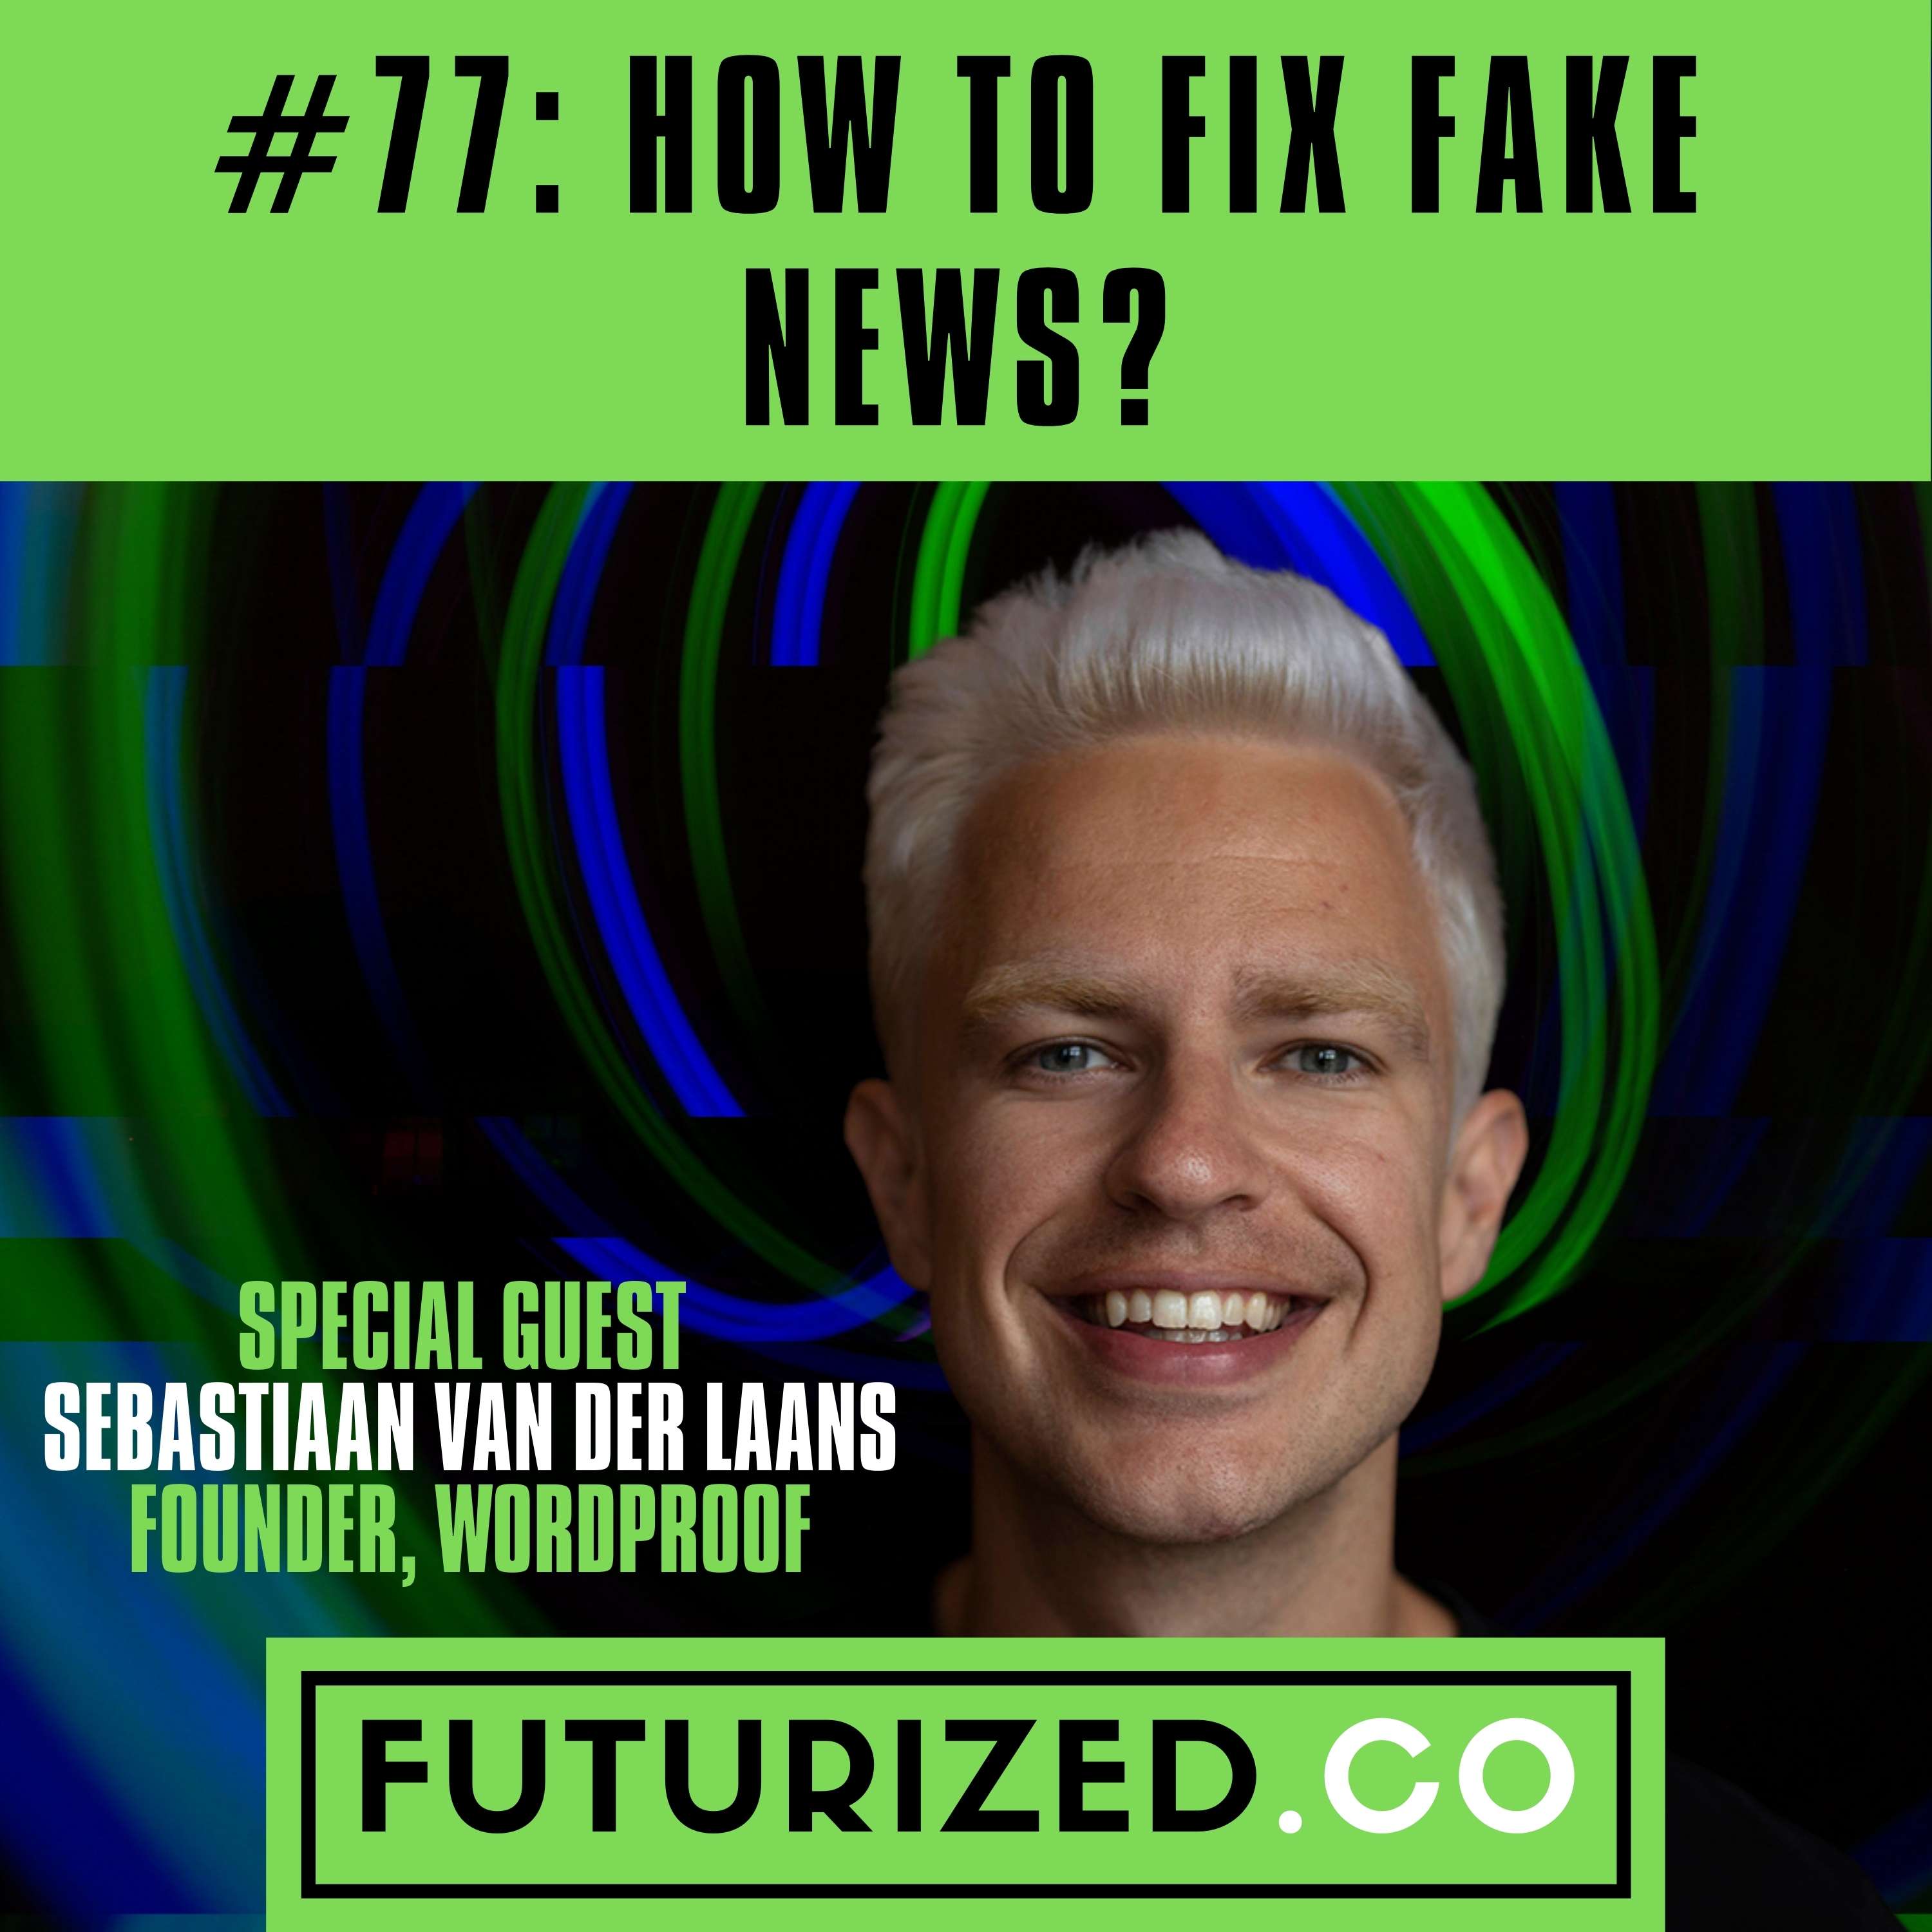 How To Fix Fake News? Image